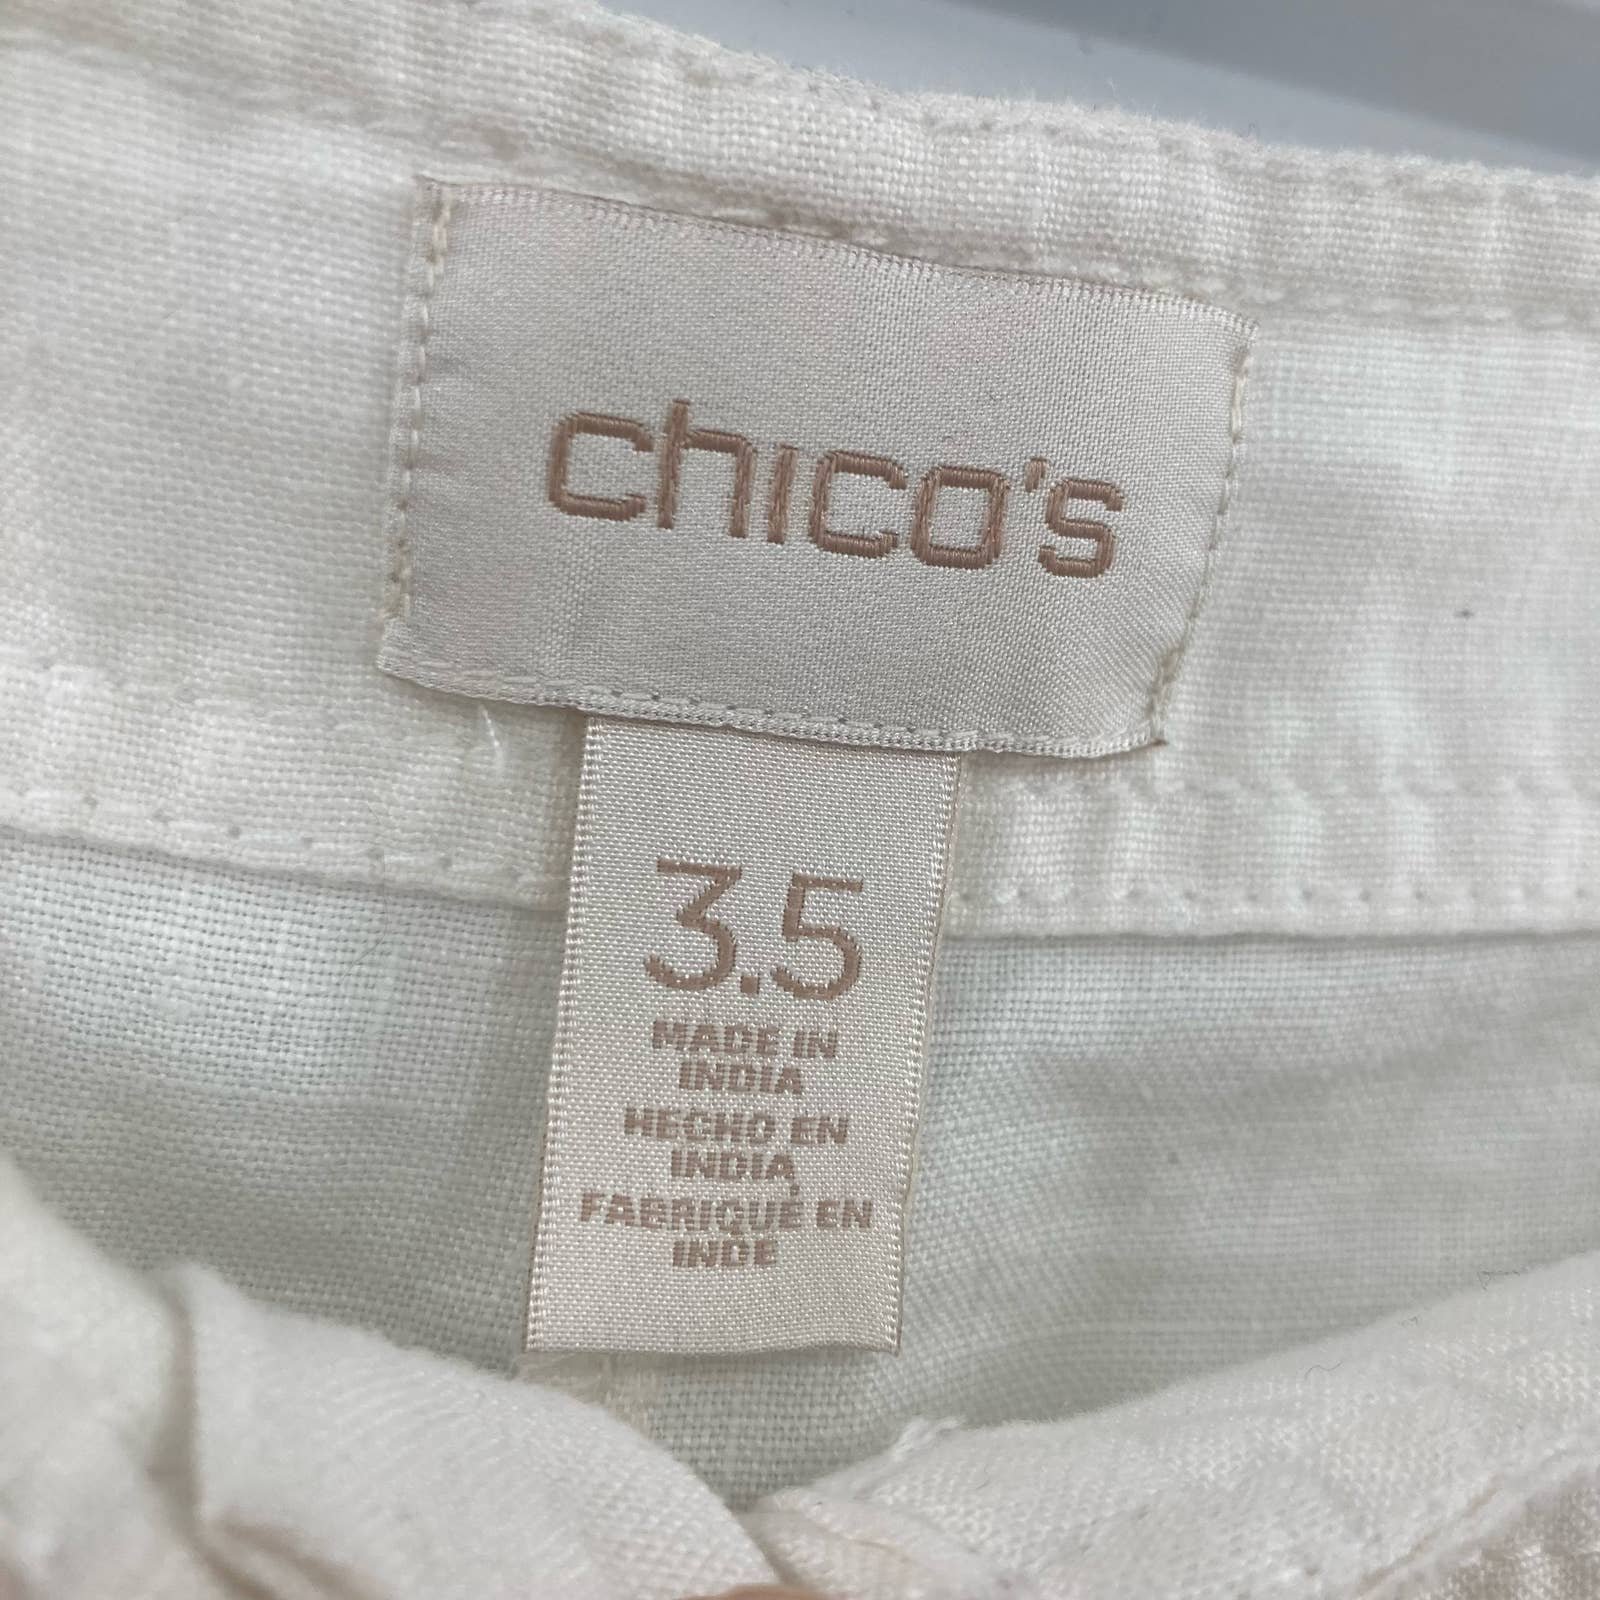 floor price Chicos Wide Leg 100% White Linen Pants Womens Size 3.5 XL 18 Sailor Beach k03Irq9gK Wholesale